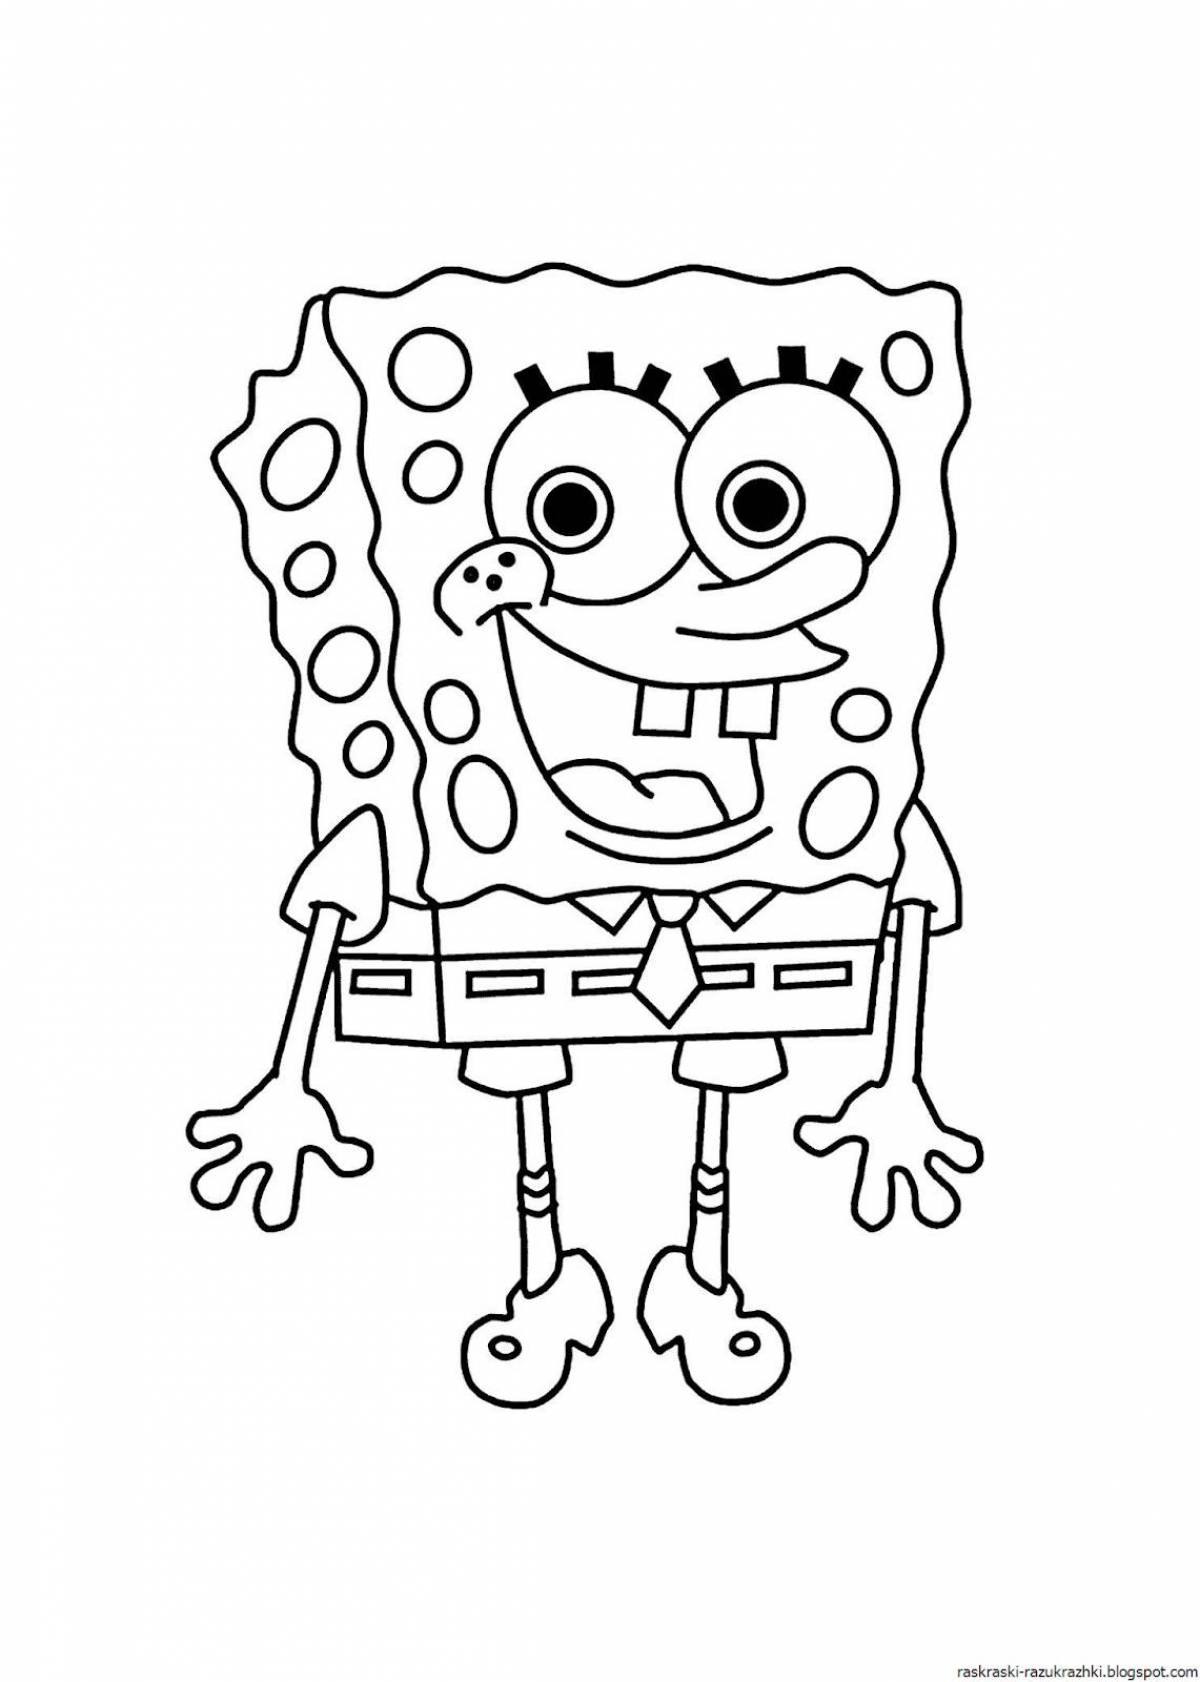 Animated coloring spongebob squarepants